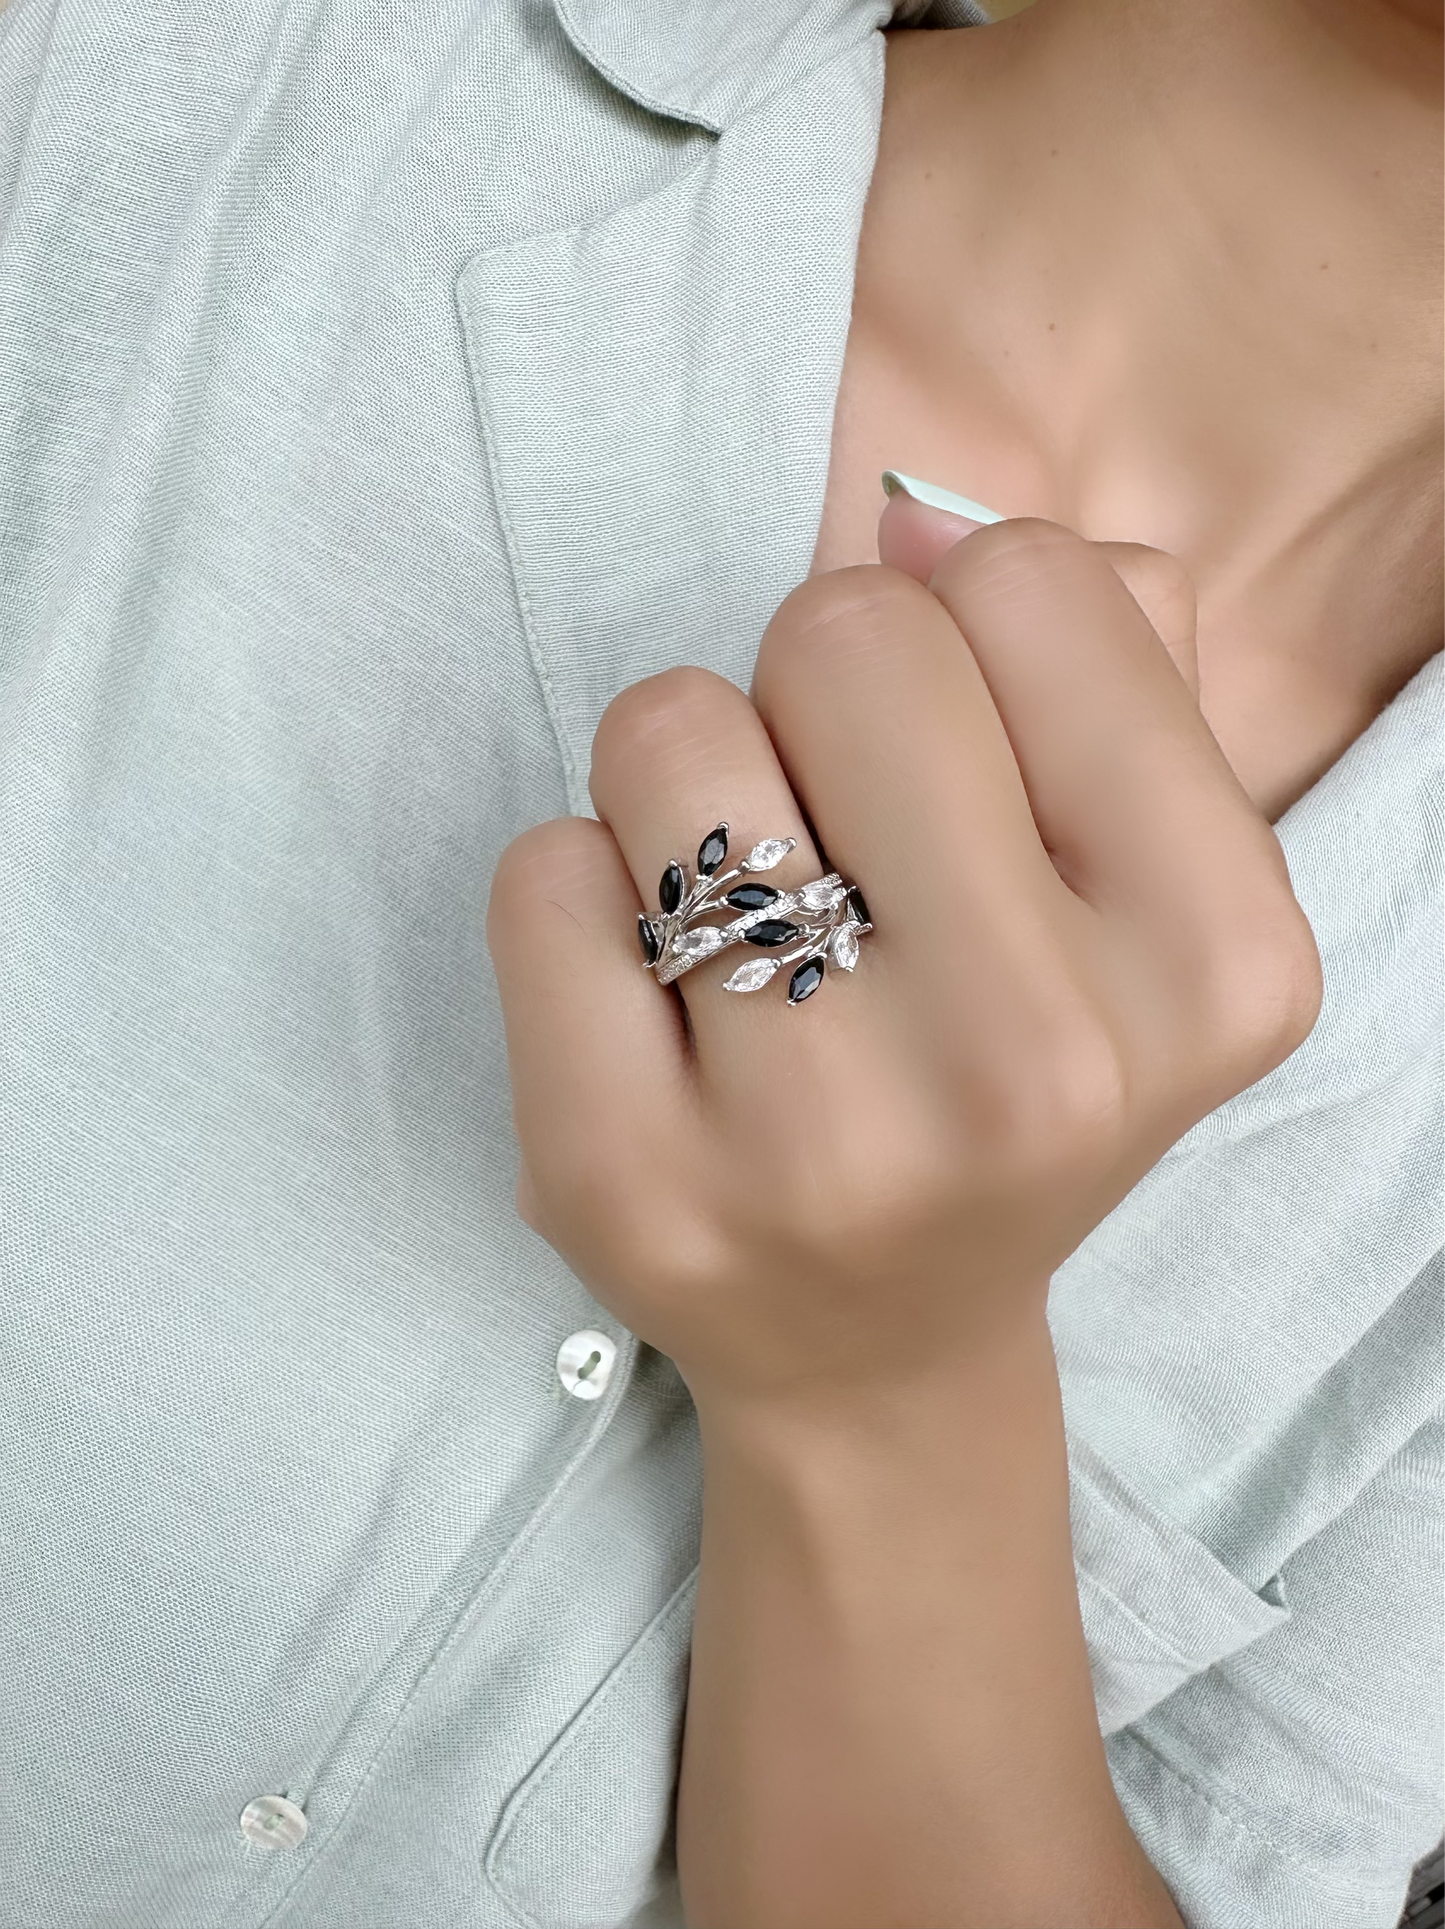 Leaf Design Ring With Black & White Stones